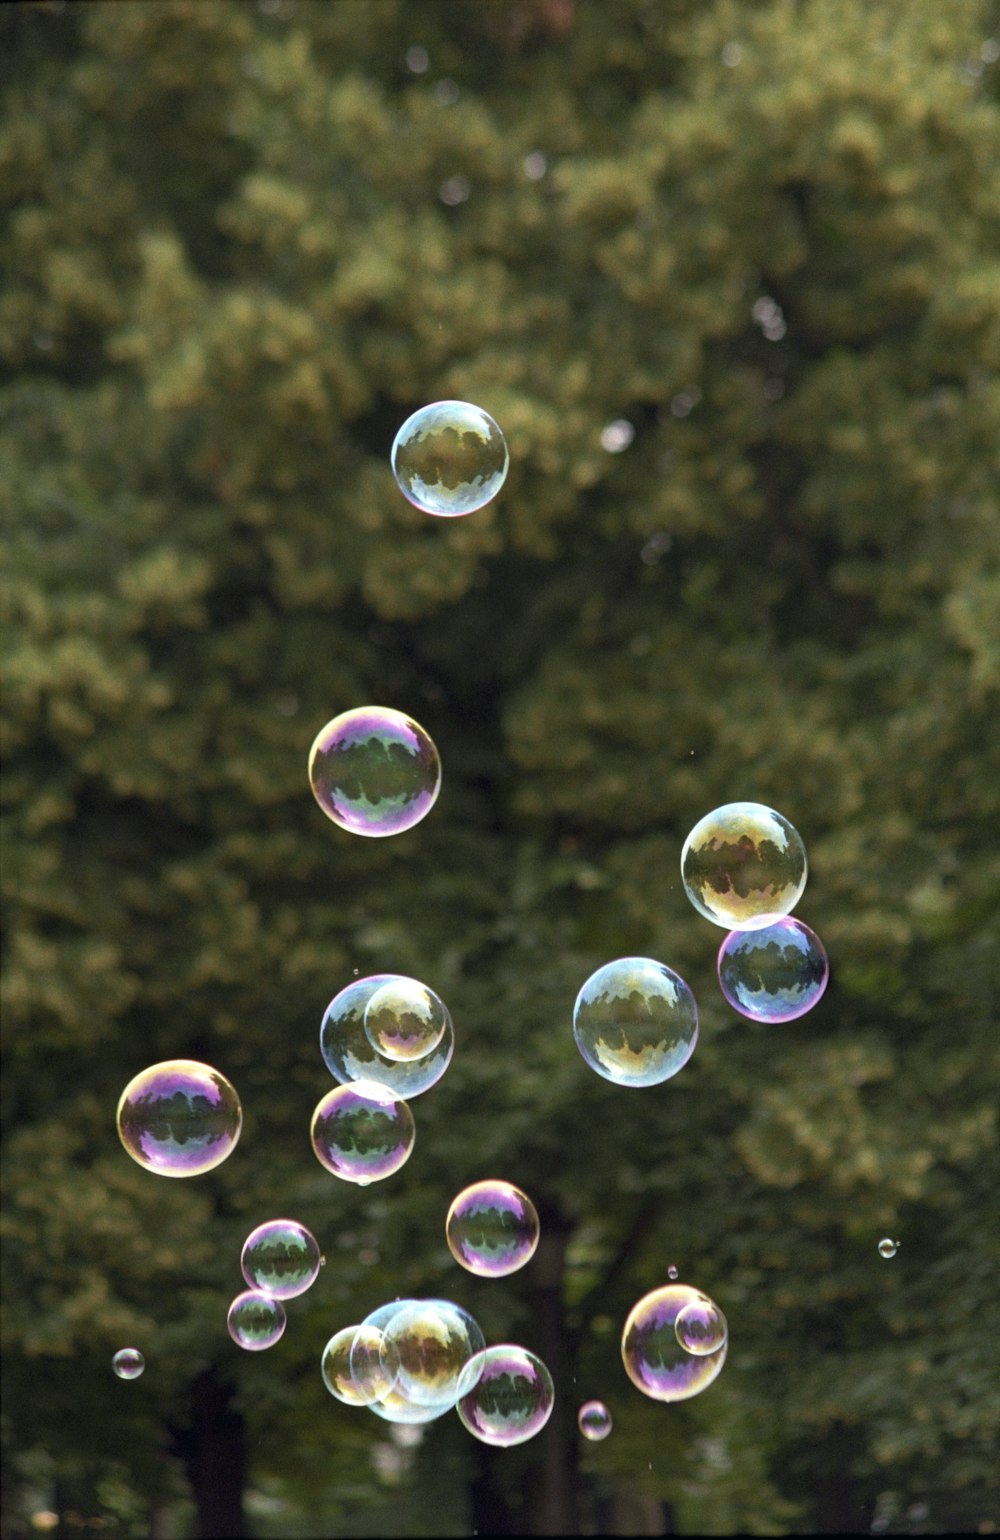 750+ Bubbles Pictures [HQ]  Download Free Images on Unsplash